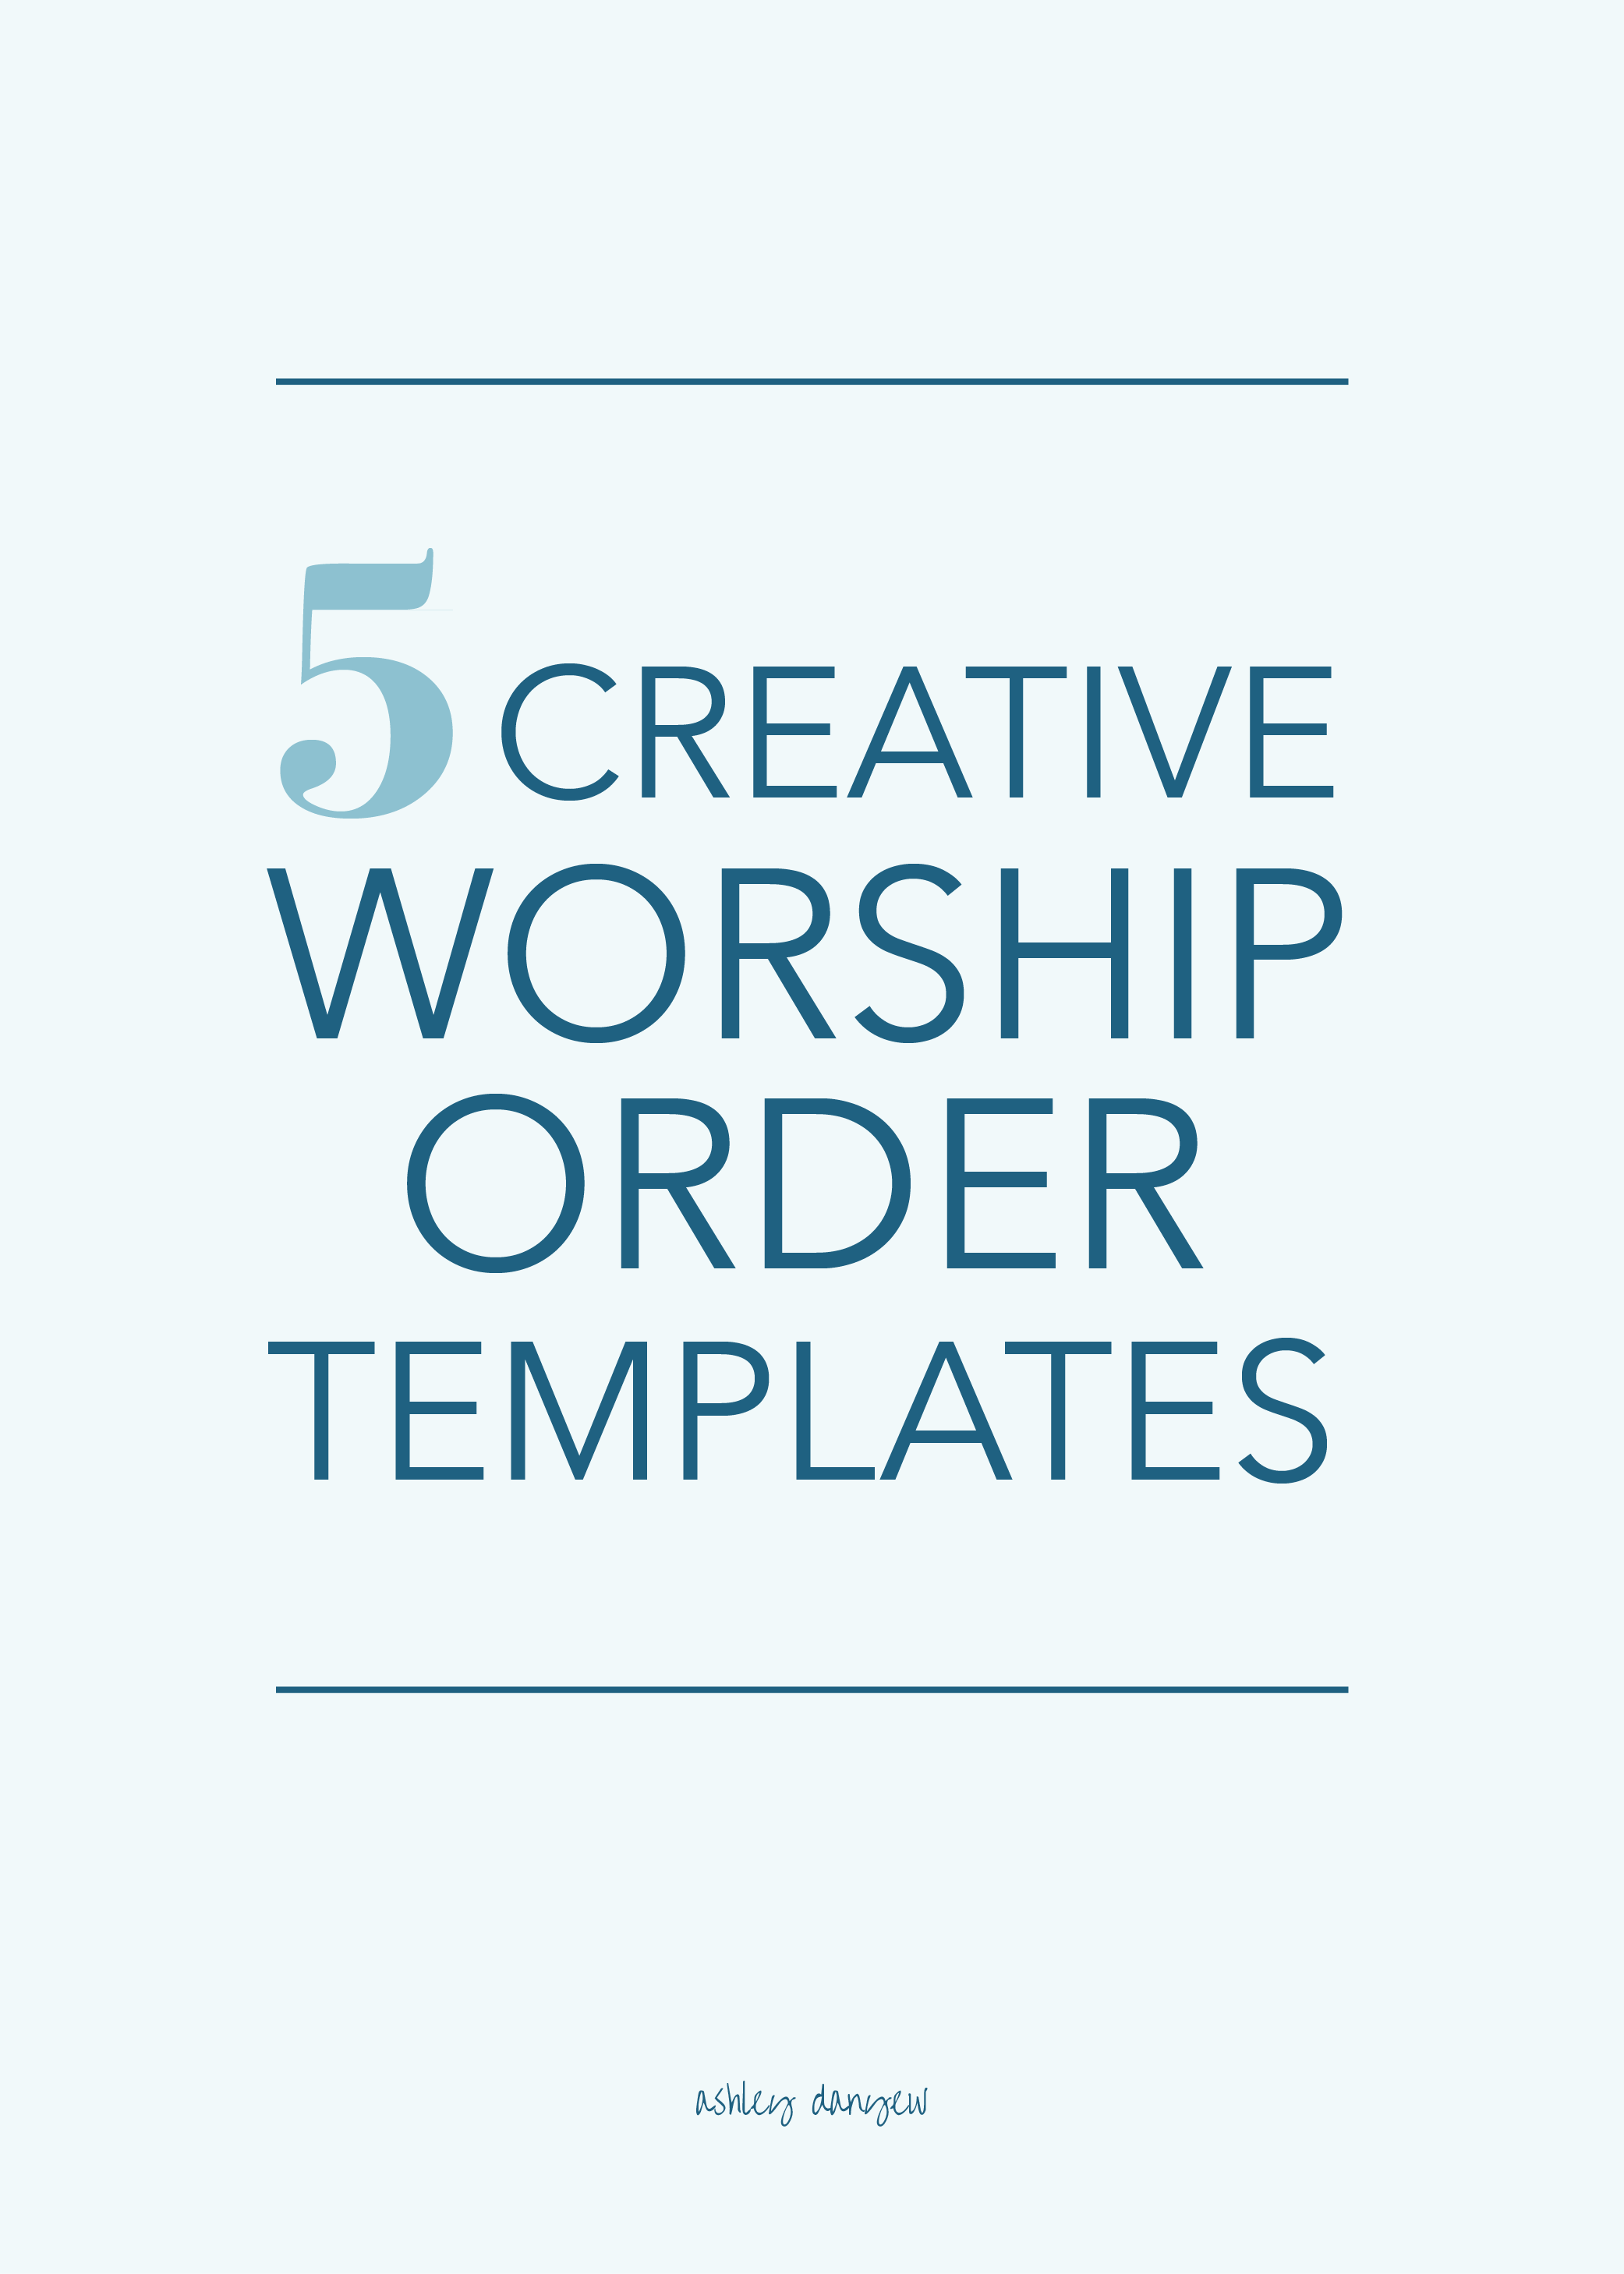 Copy of 5 Creative Worship Order Templates